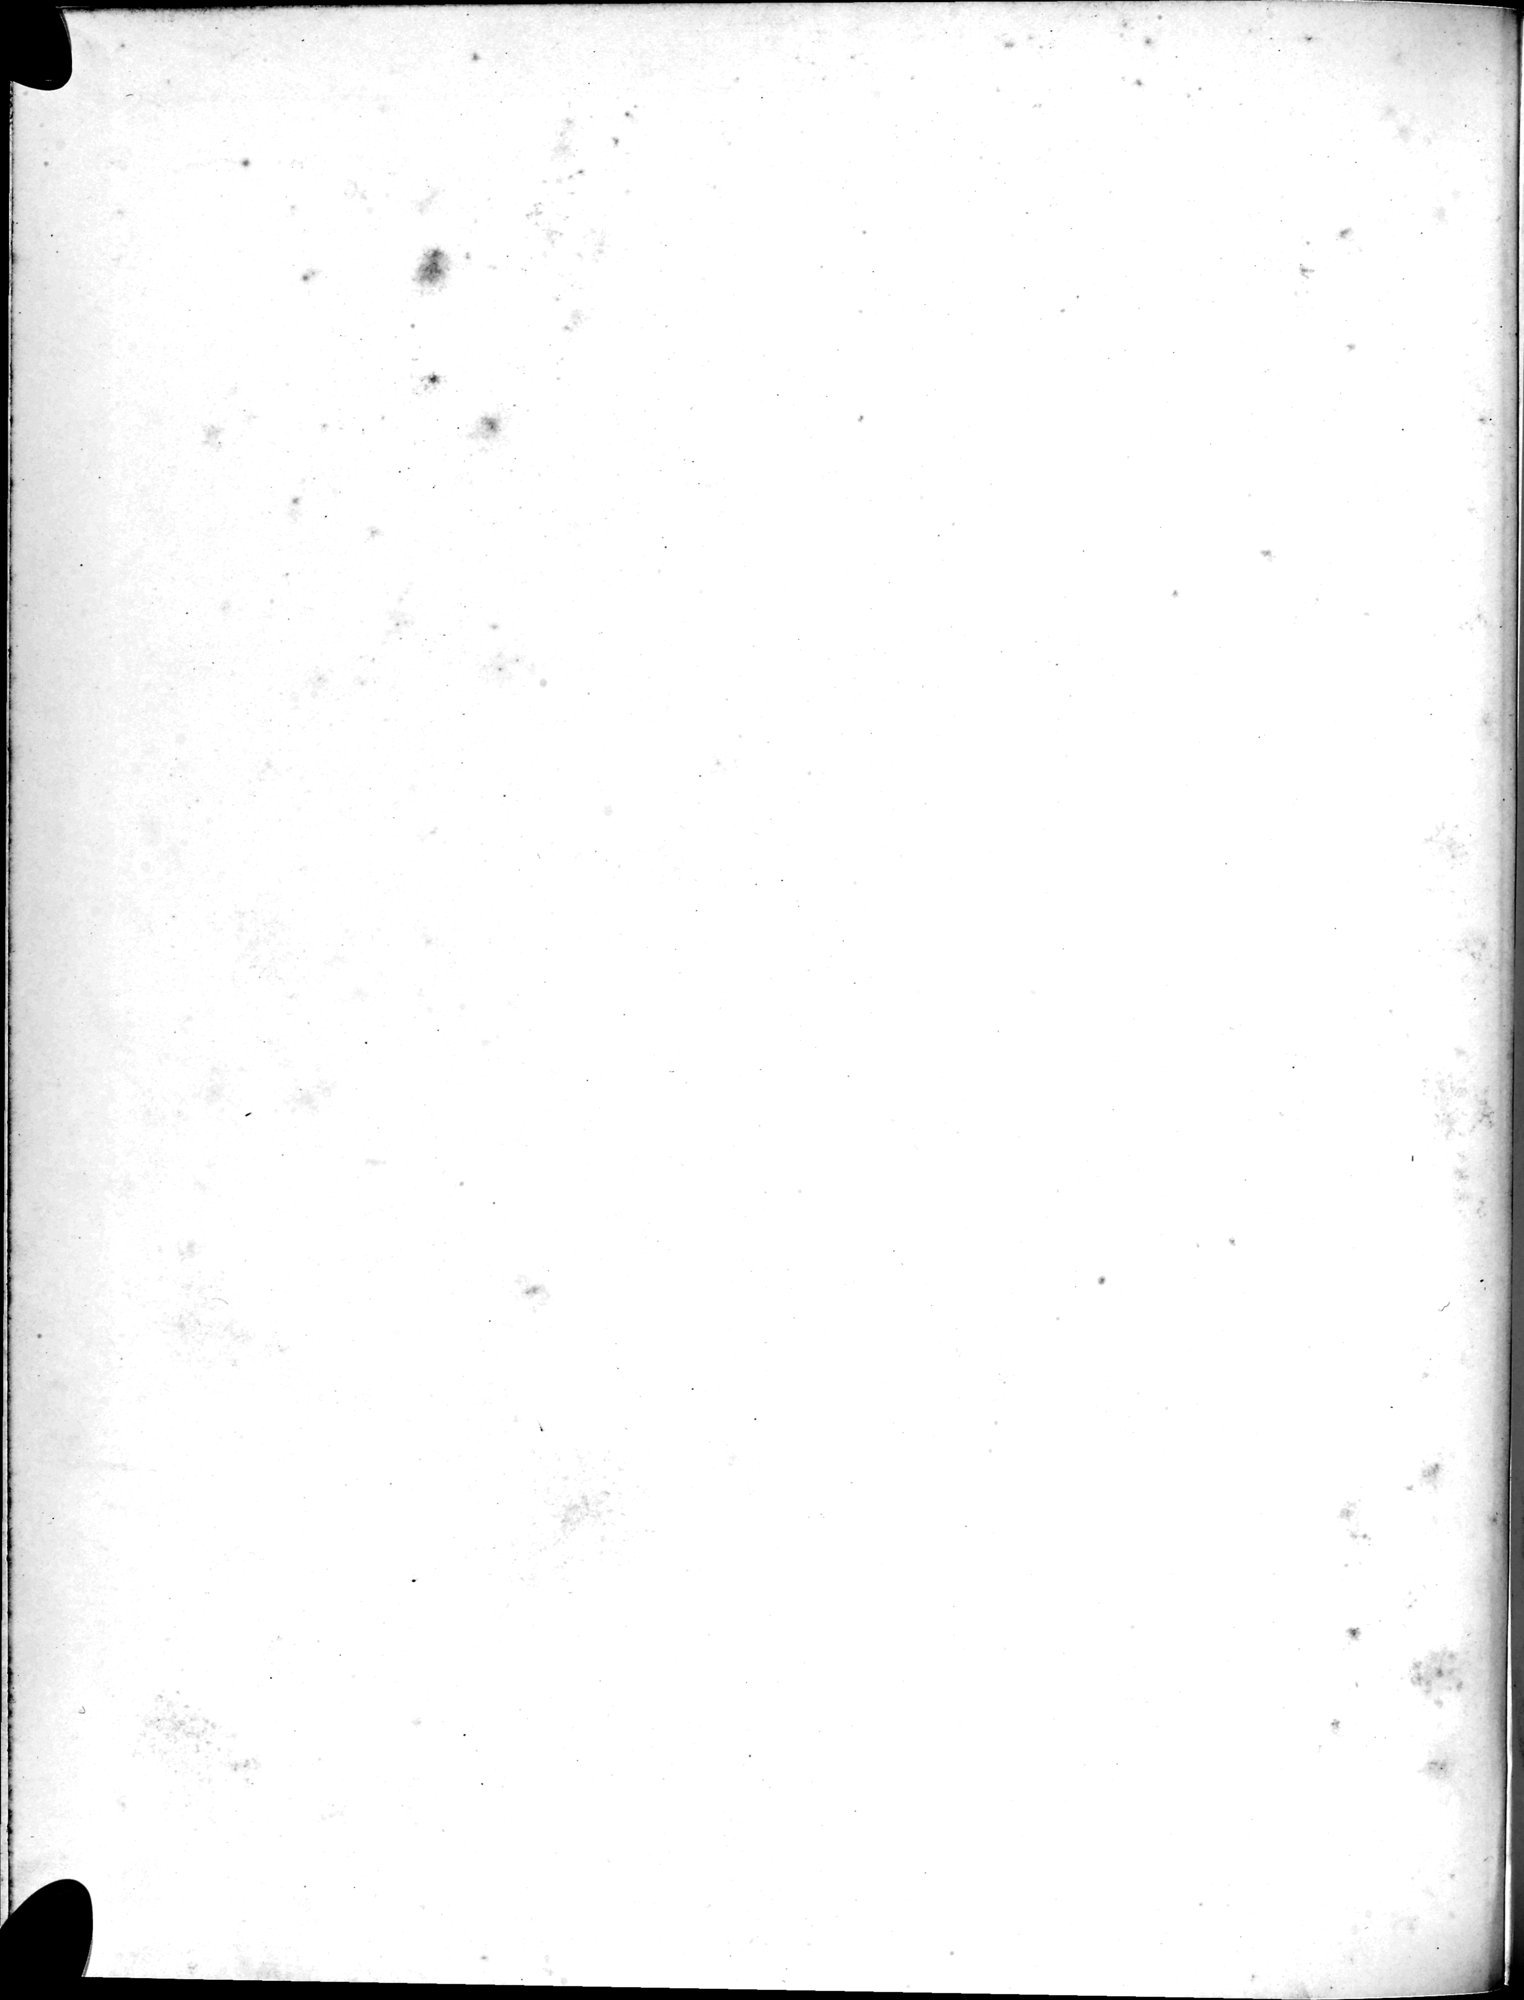 Mongoliia i Kam : vol.4 / Page 4 (Grayscale High Resolution Image)